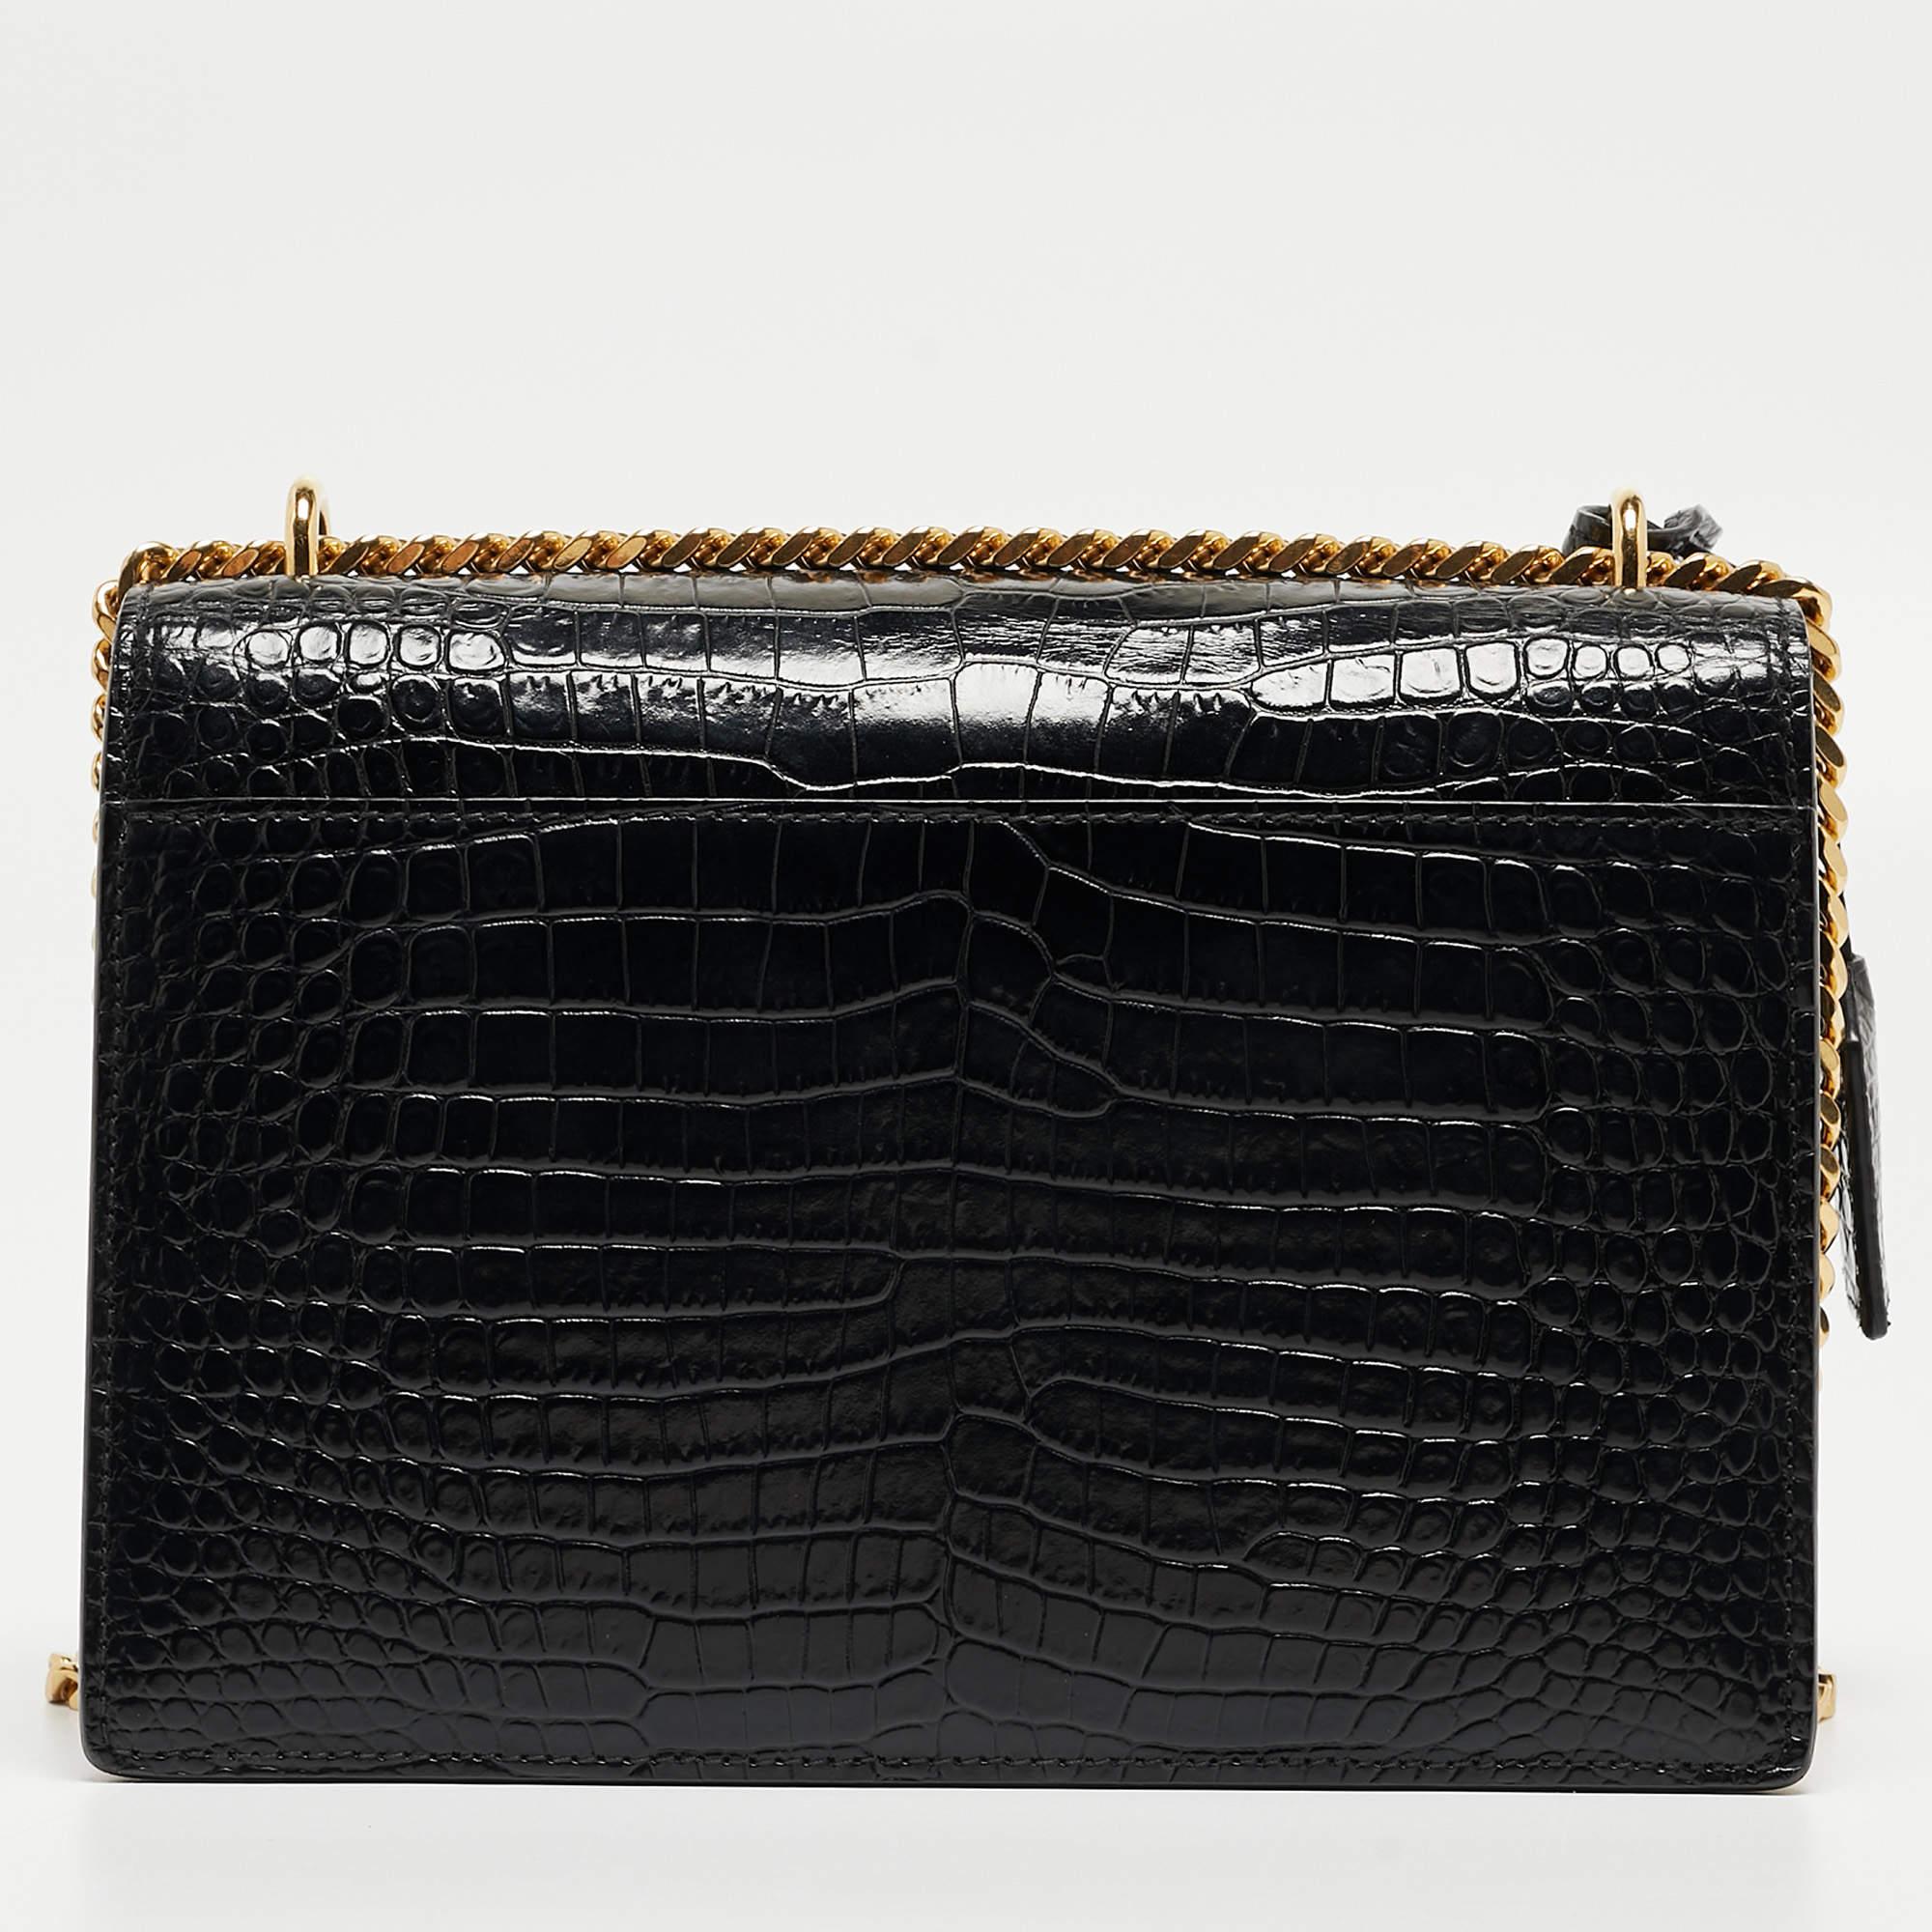 Saint Laurent Black Croc Embossed Leather Medium Sunset Bag 8